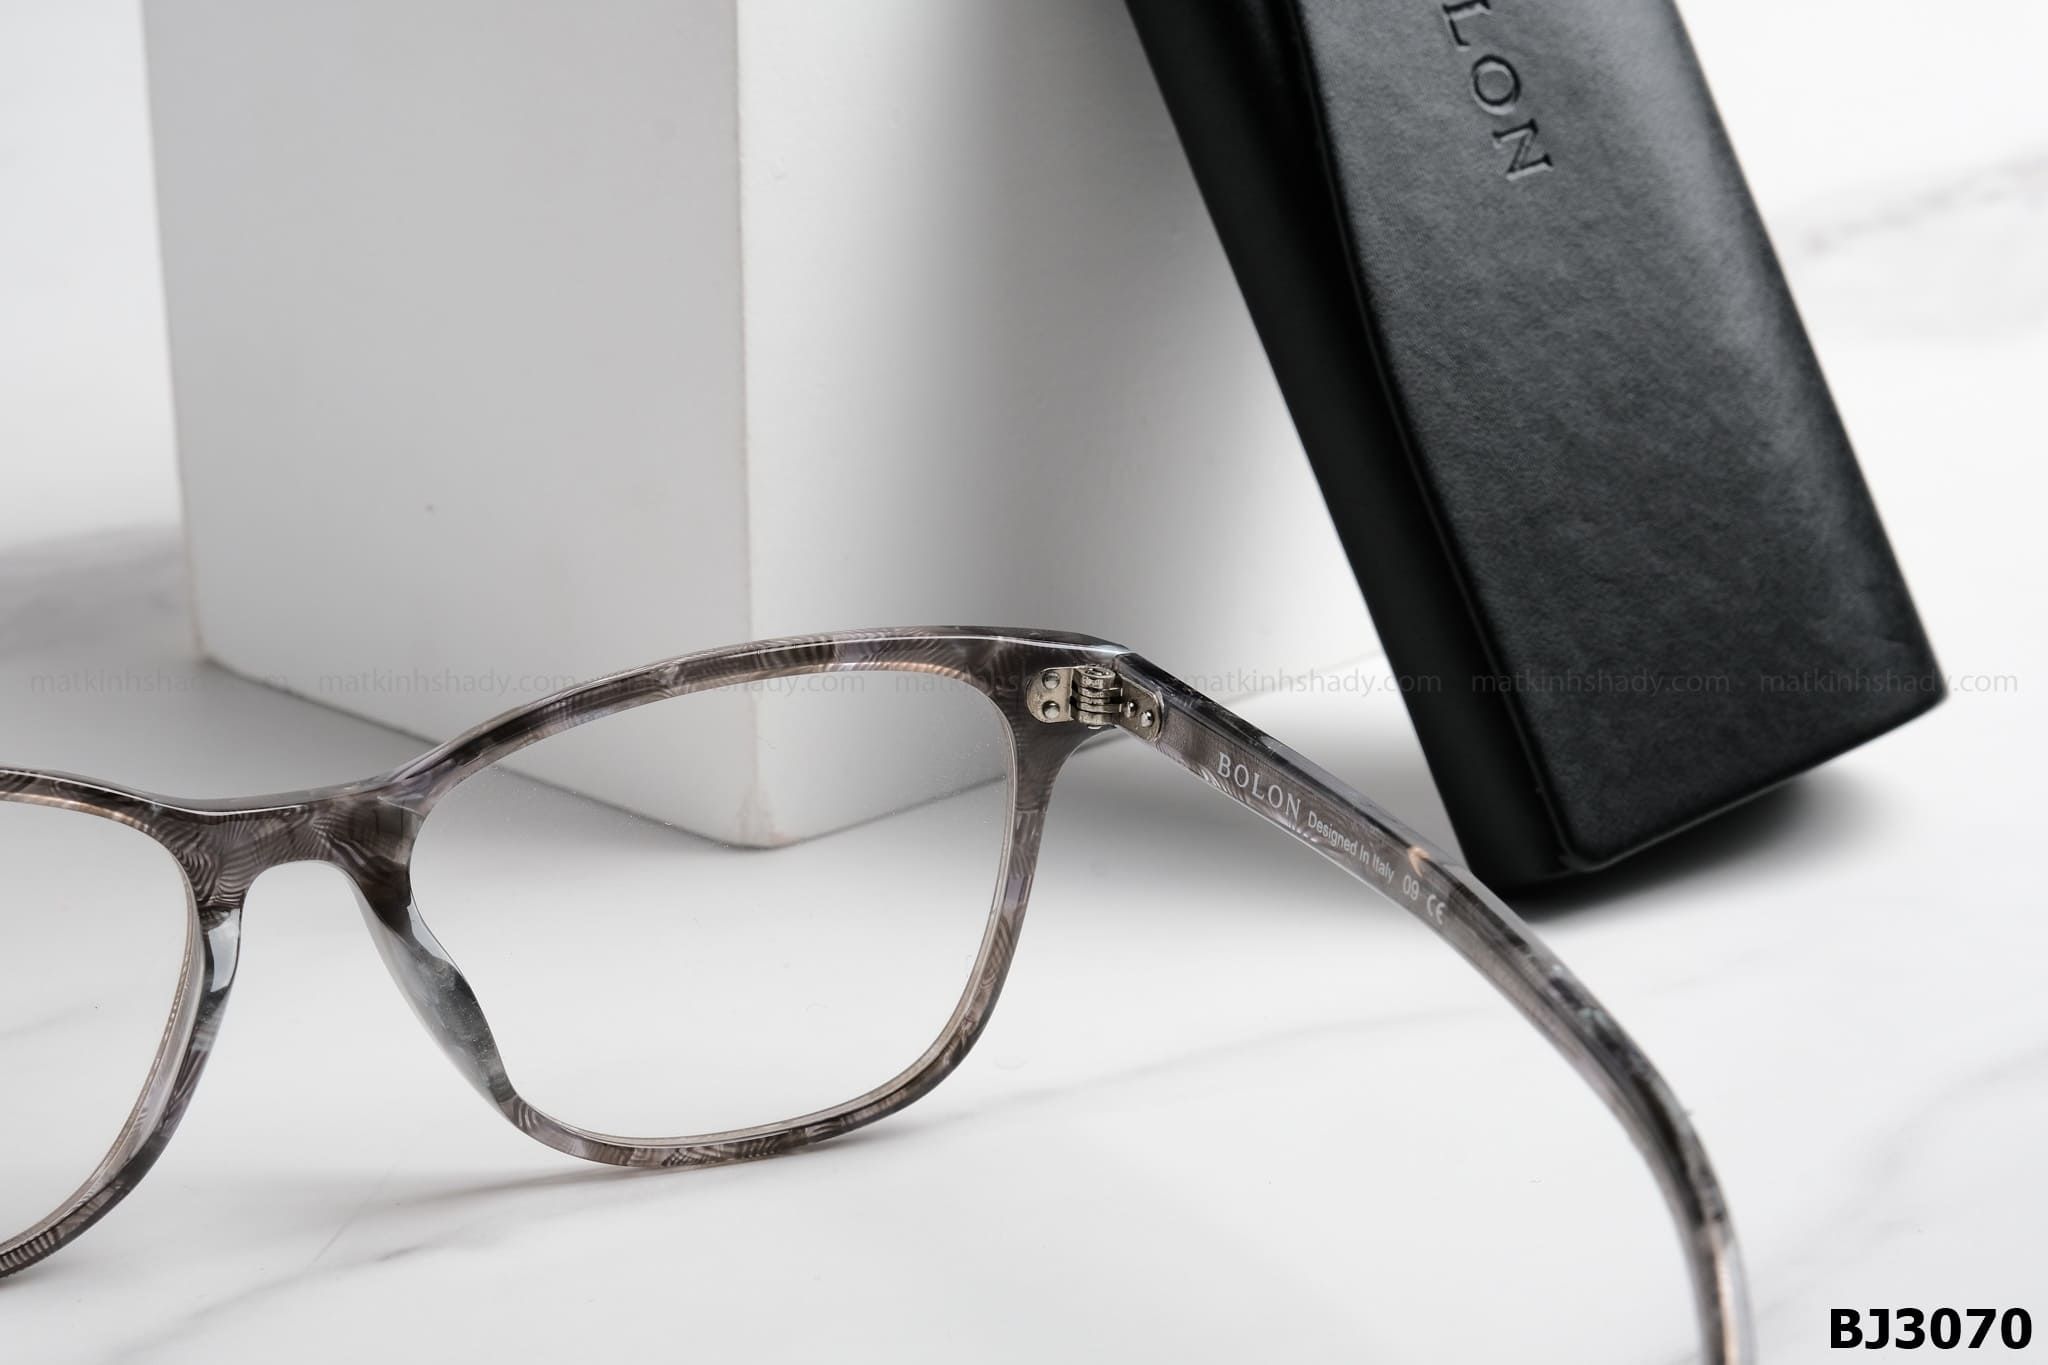  Bolon Eyewear - Glasses - BJ3070 